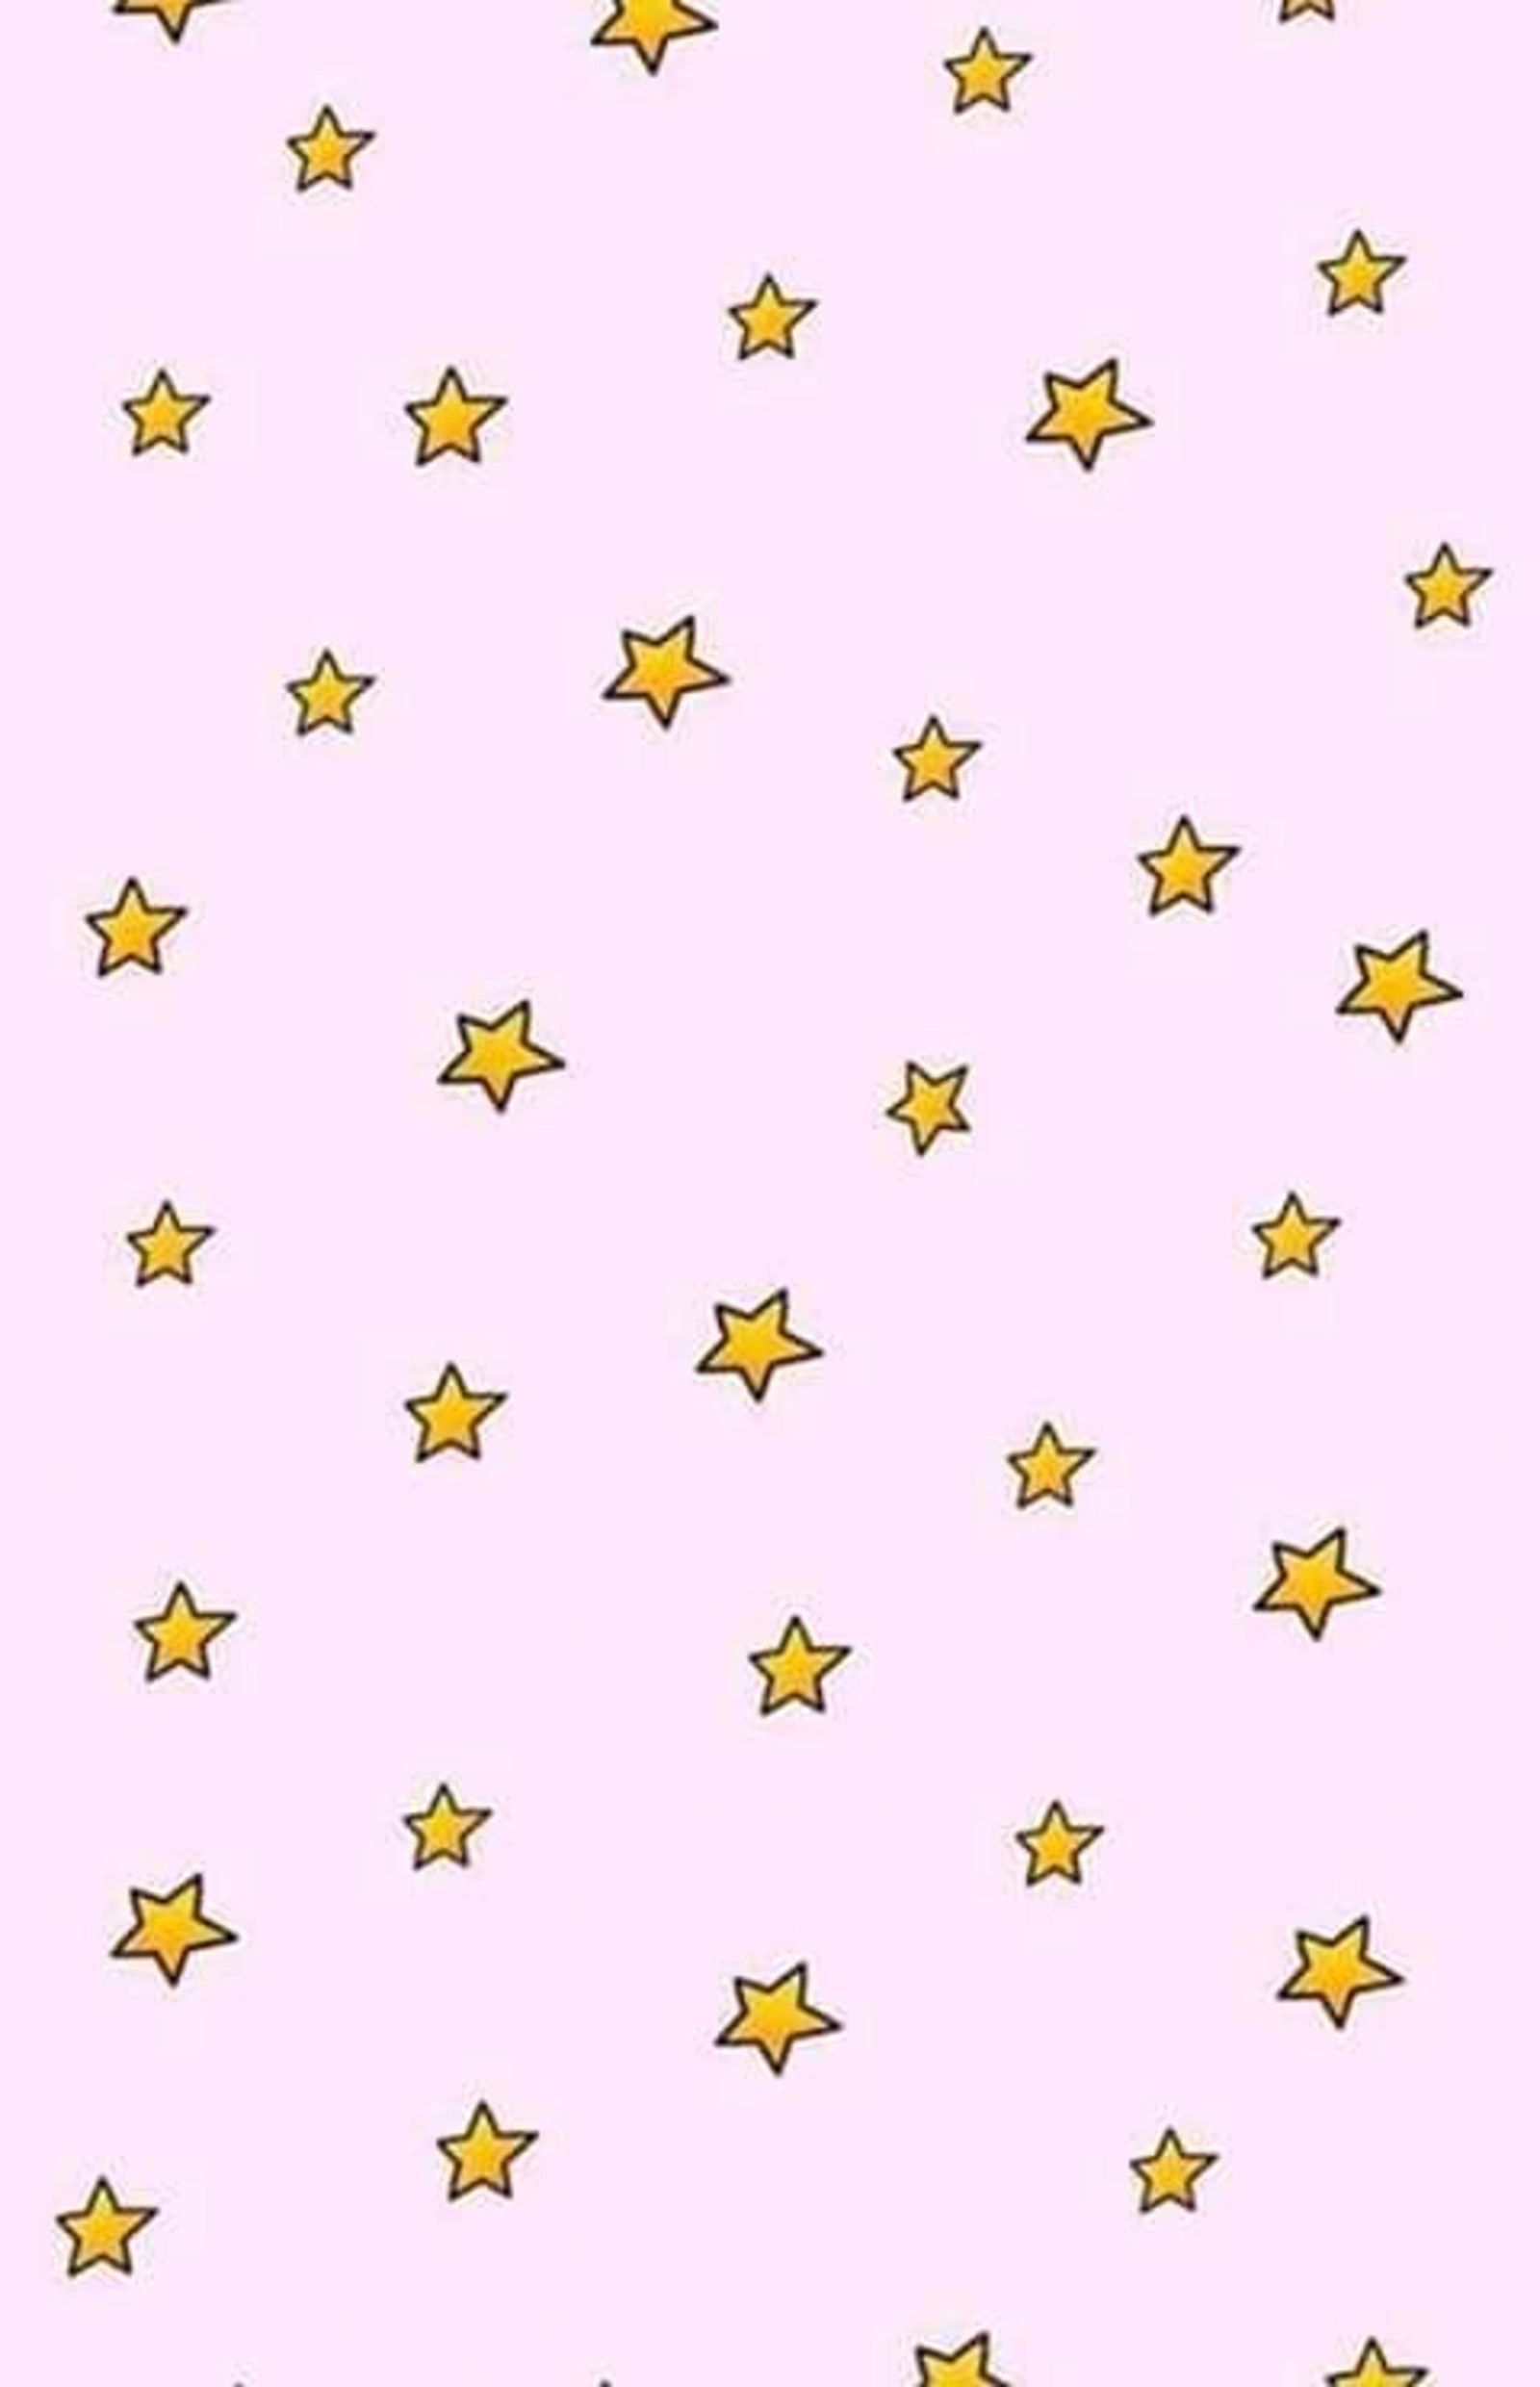 Inspirational Pink Wallpaper Vsco Stars Yellow. Star wallpaper, Pink wallpaper iphone, Wall paper phone